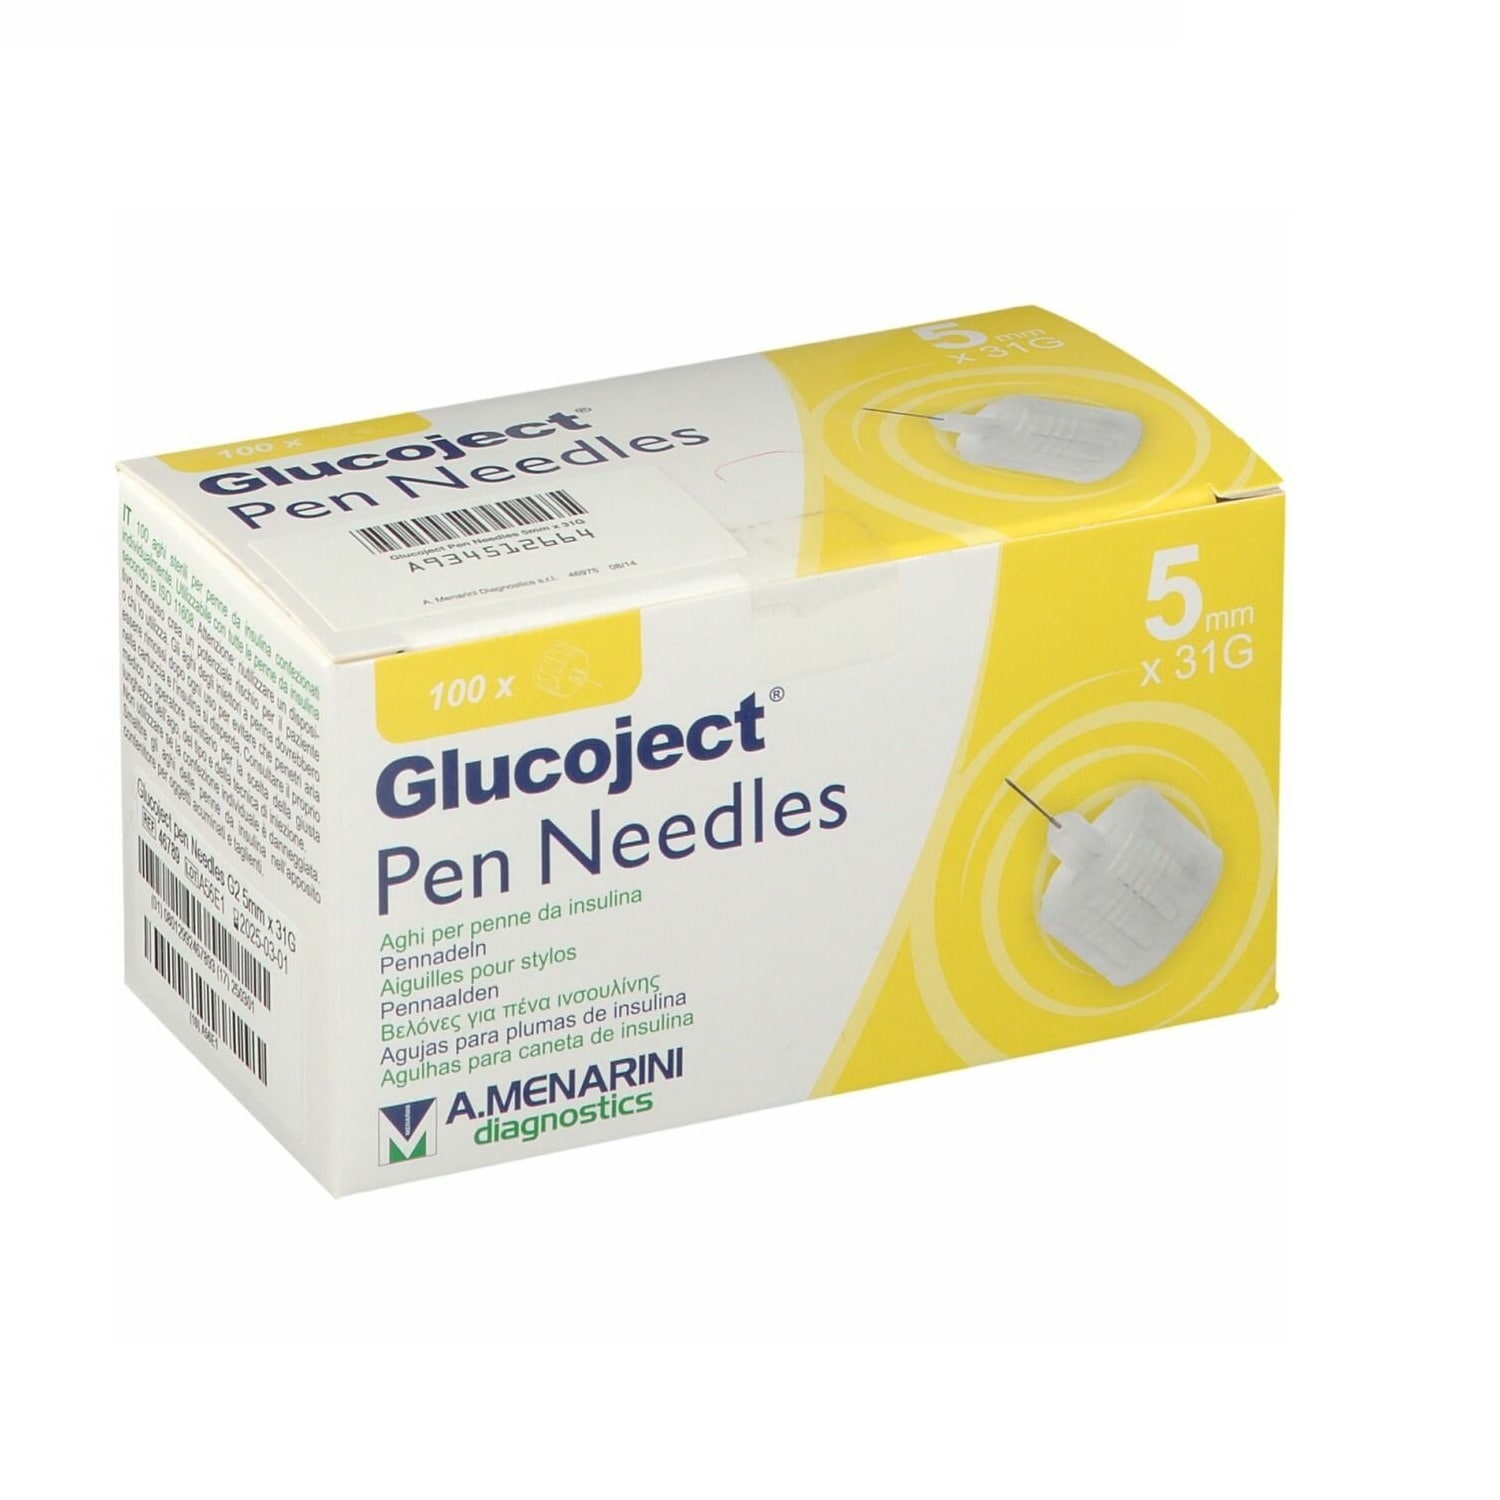 Glucoject Pen Needles 5mm 31G - 100 Aghi Sterili per Penna da Insulina